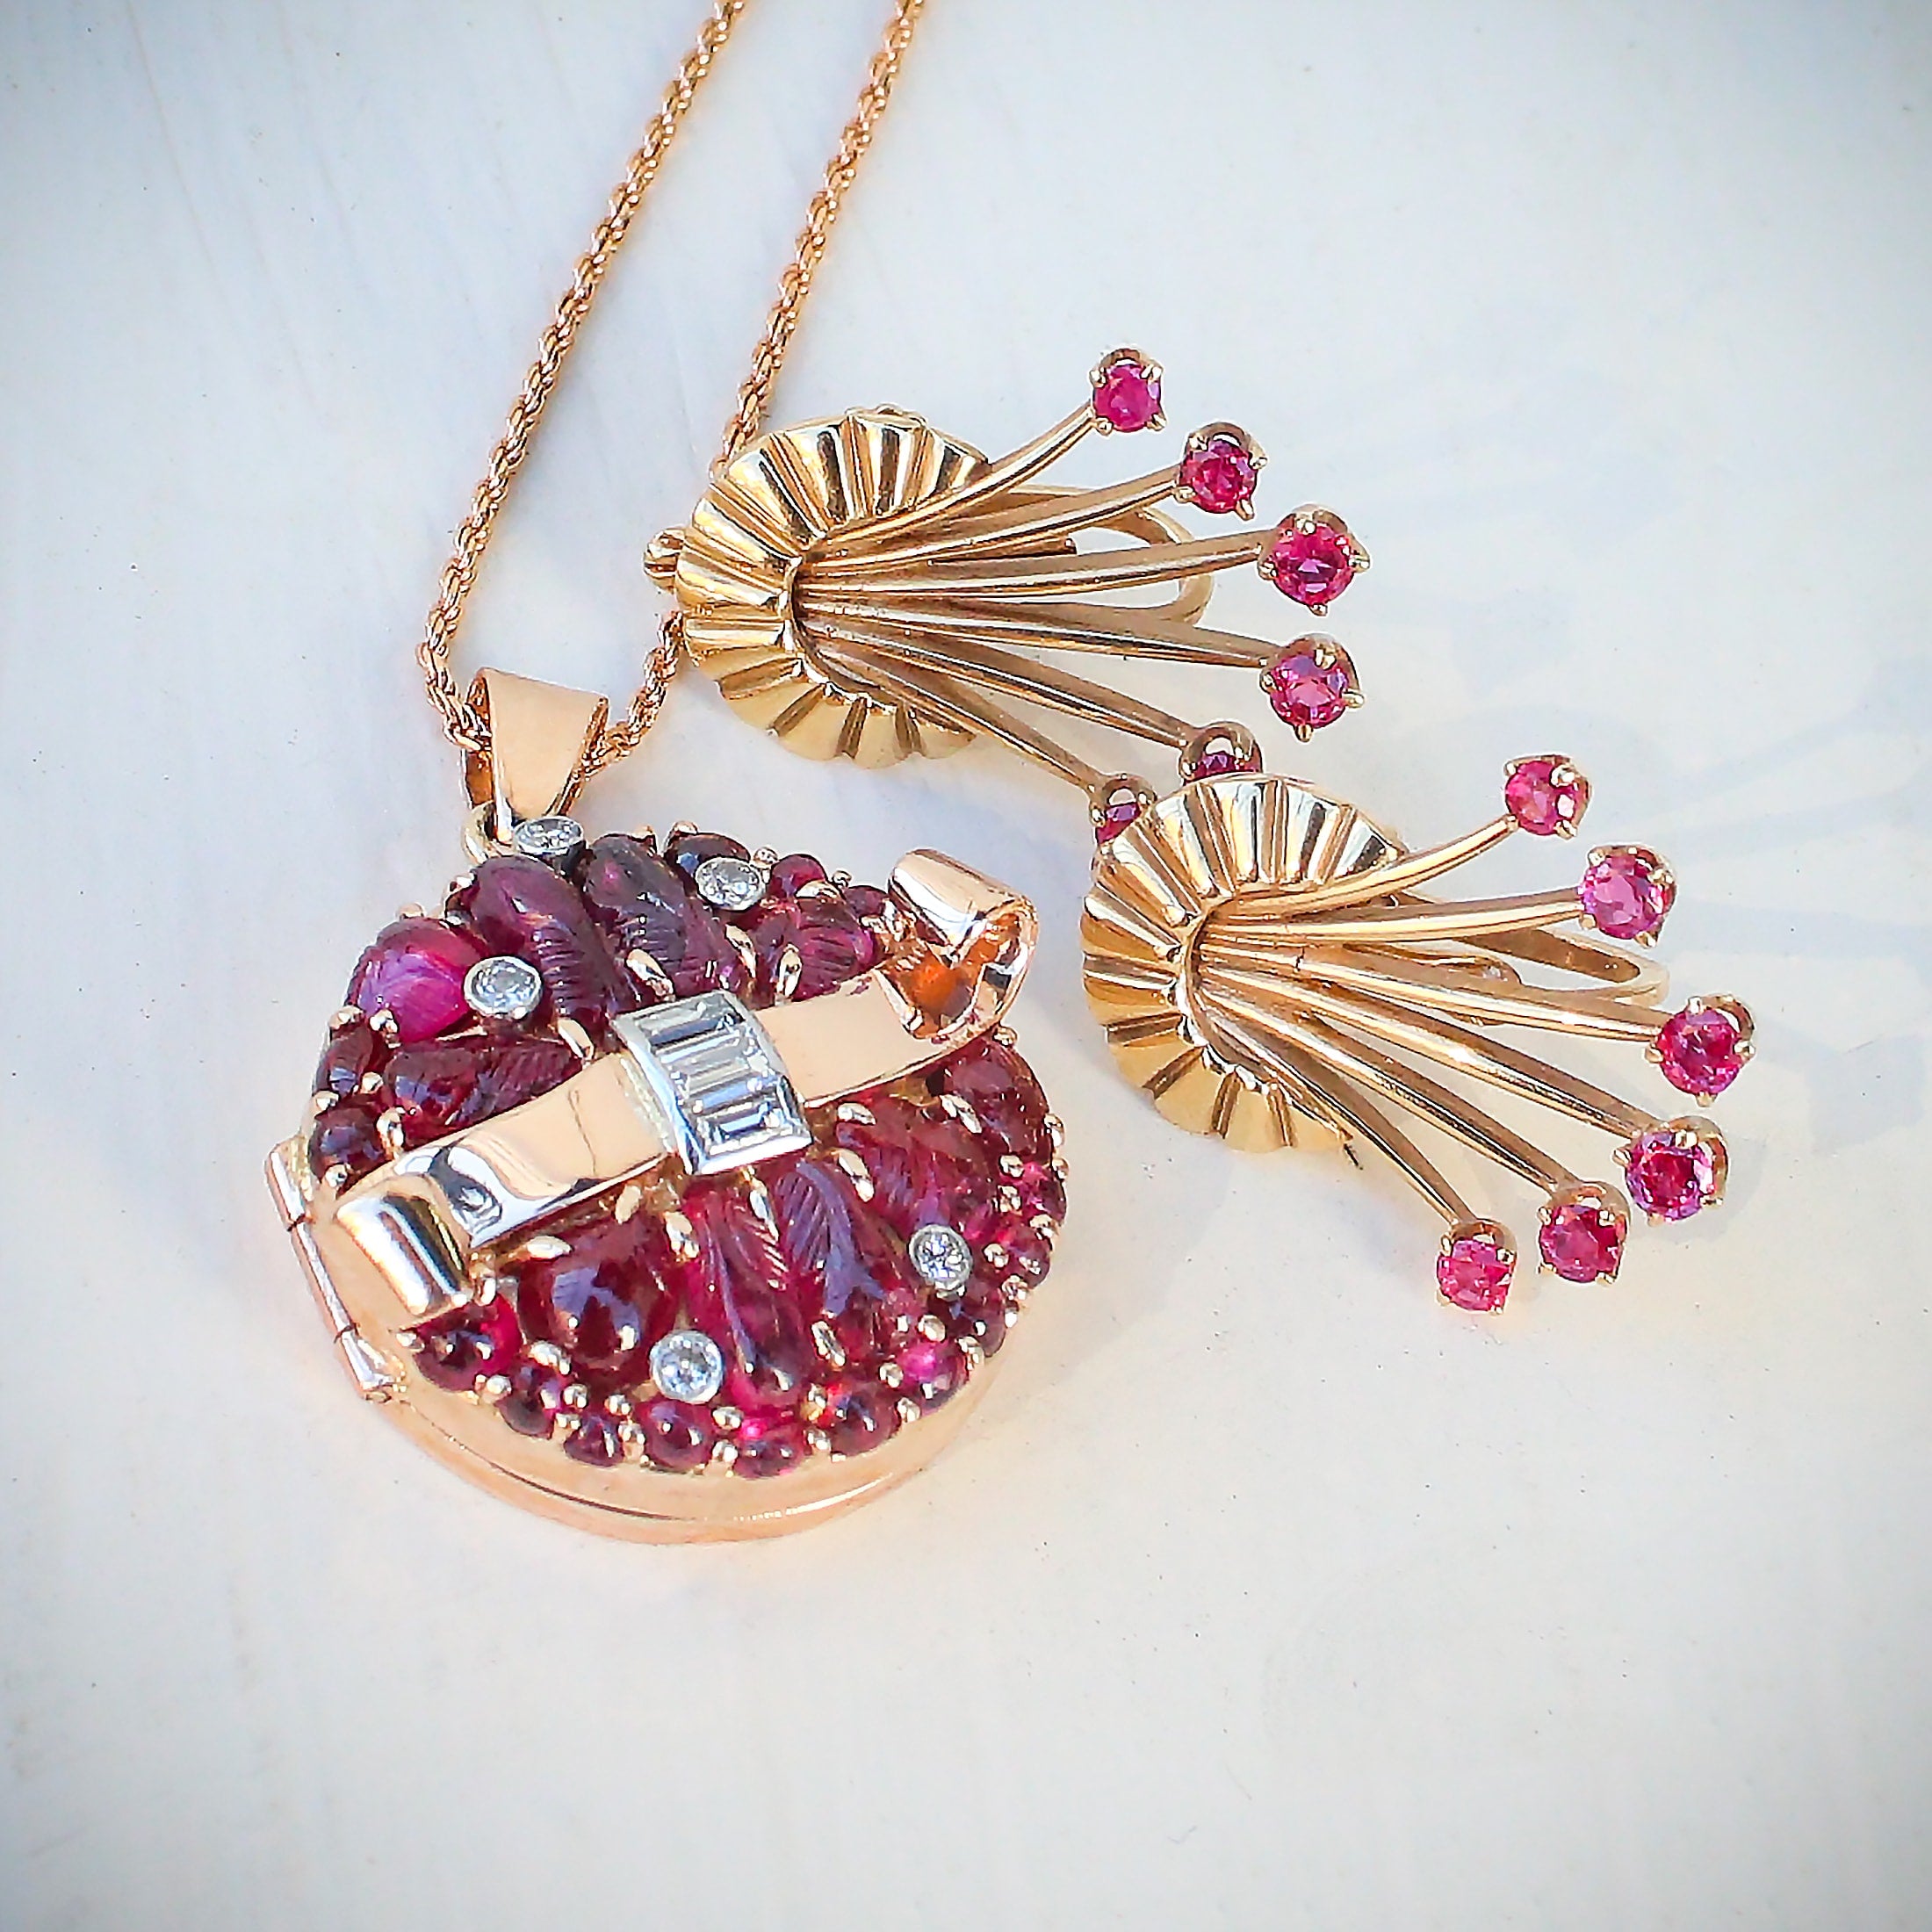 1940's retro rose gold ruby and diamond pendant earrings.